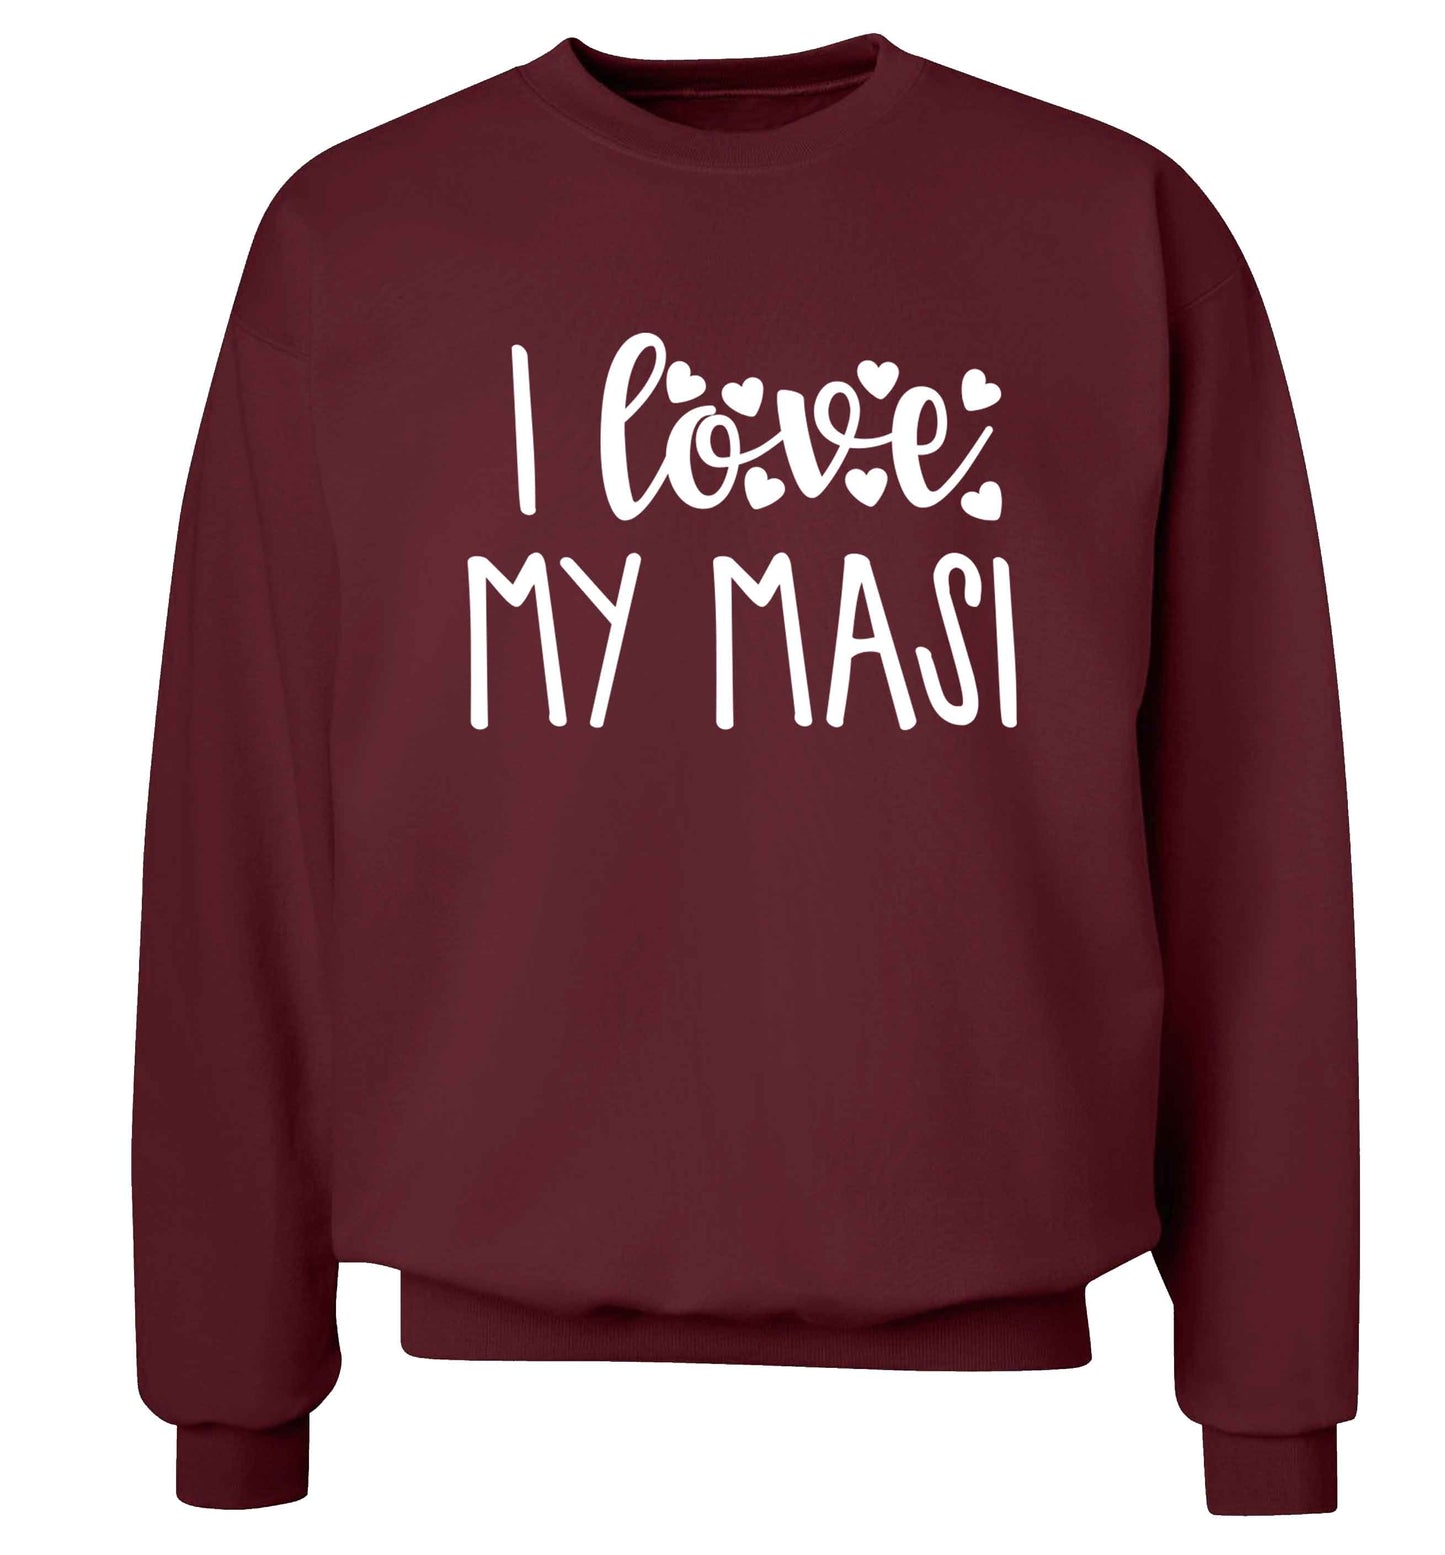 I love my masi Adult's unisex maroon Sweater 2XL